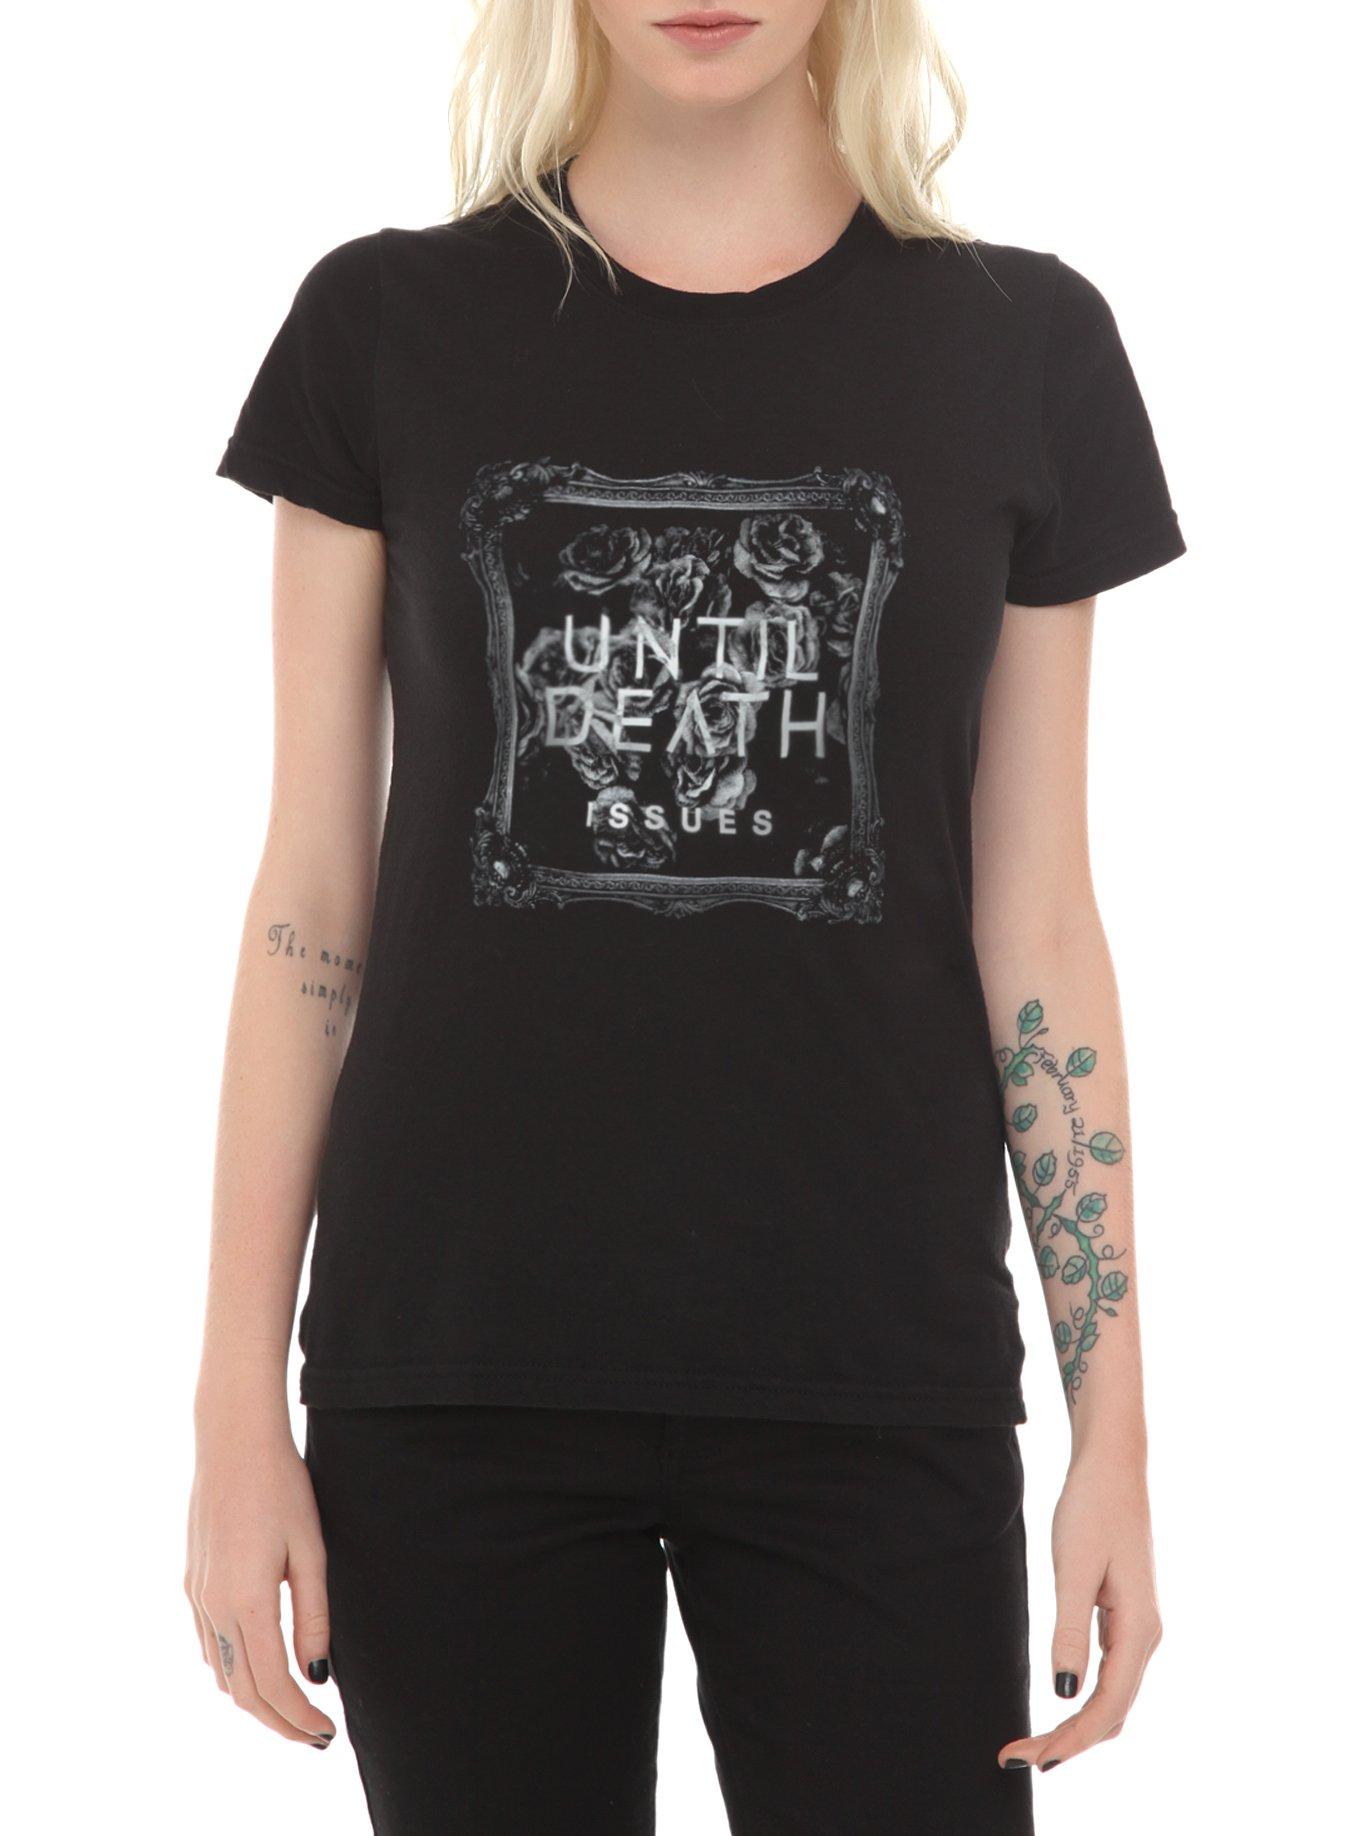 Issues Until Death Girls T-Shirt, BLACK, hi-res